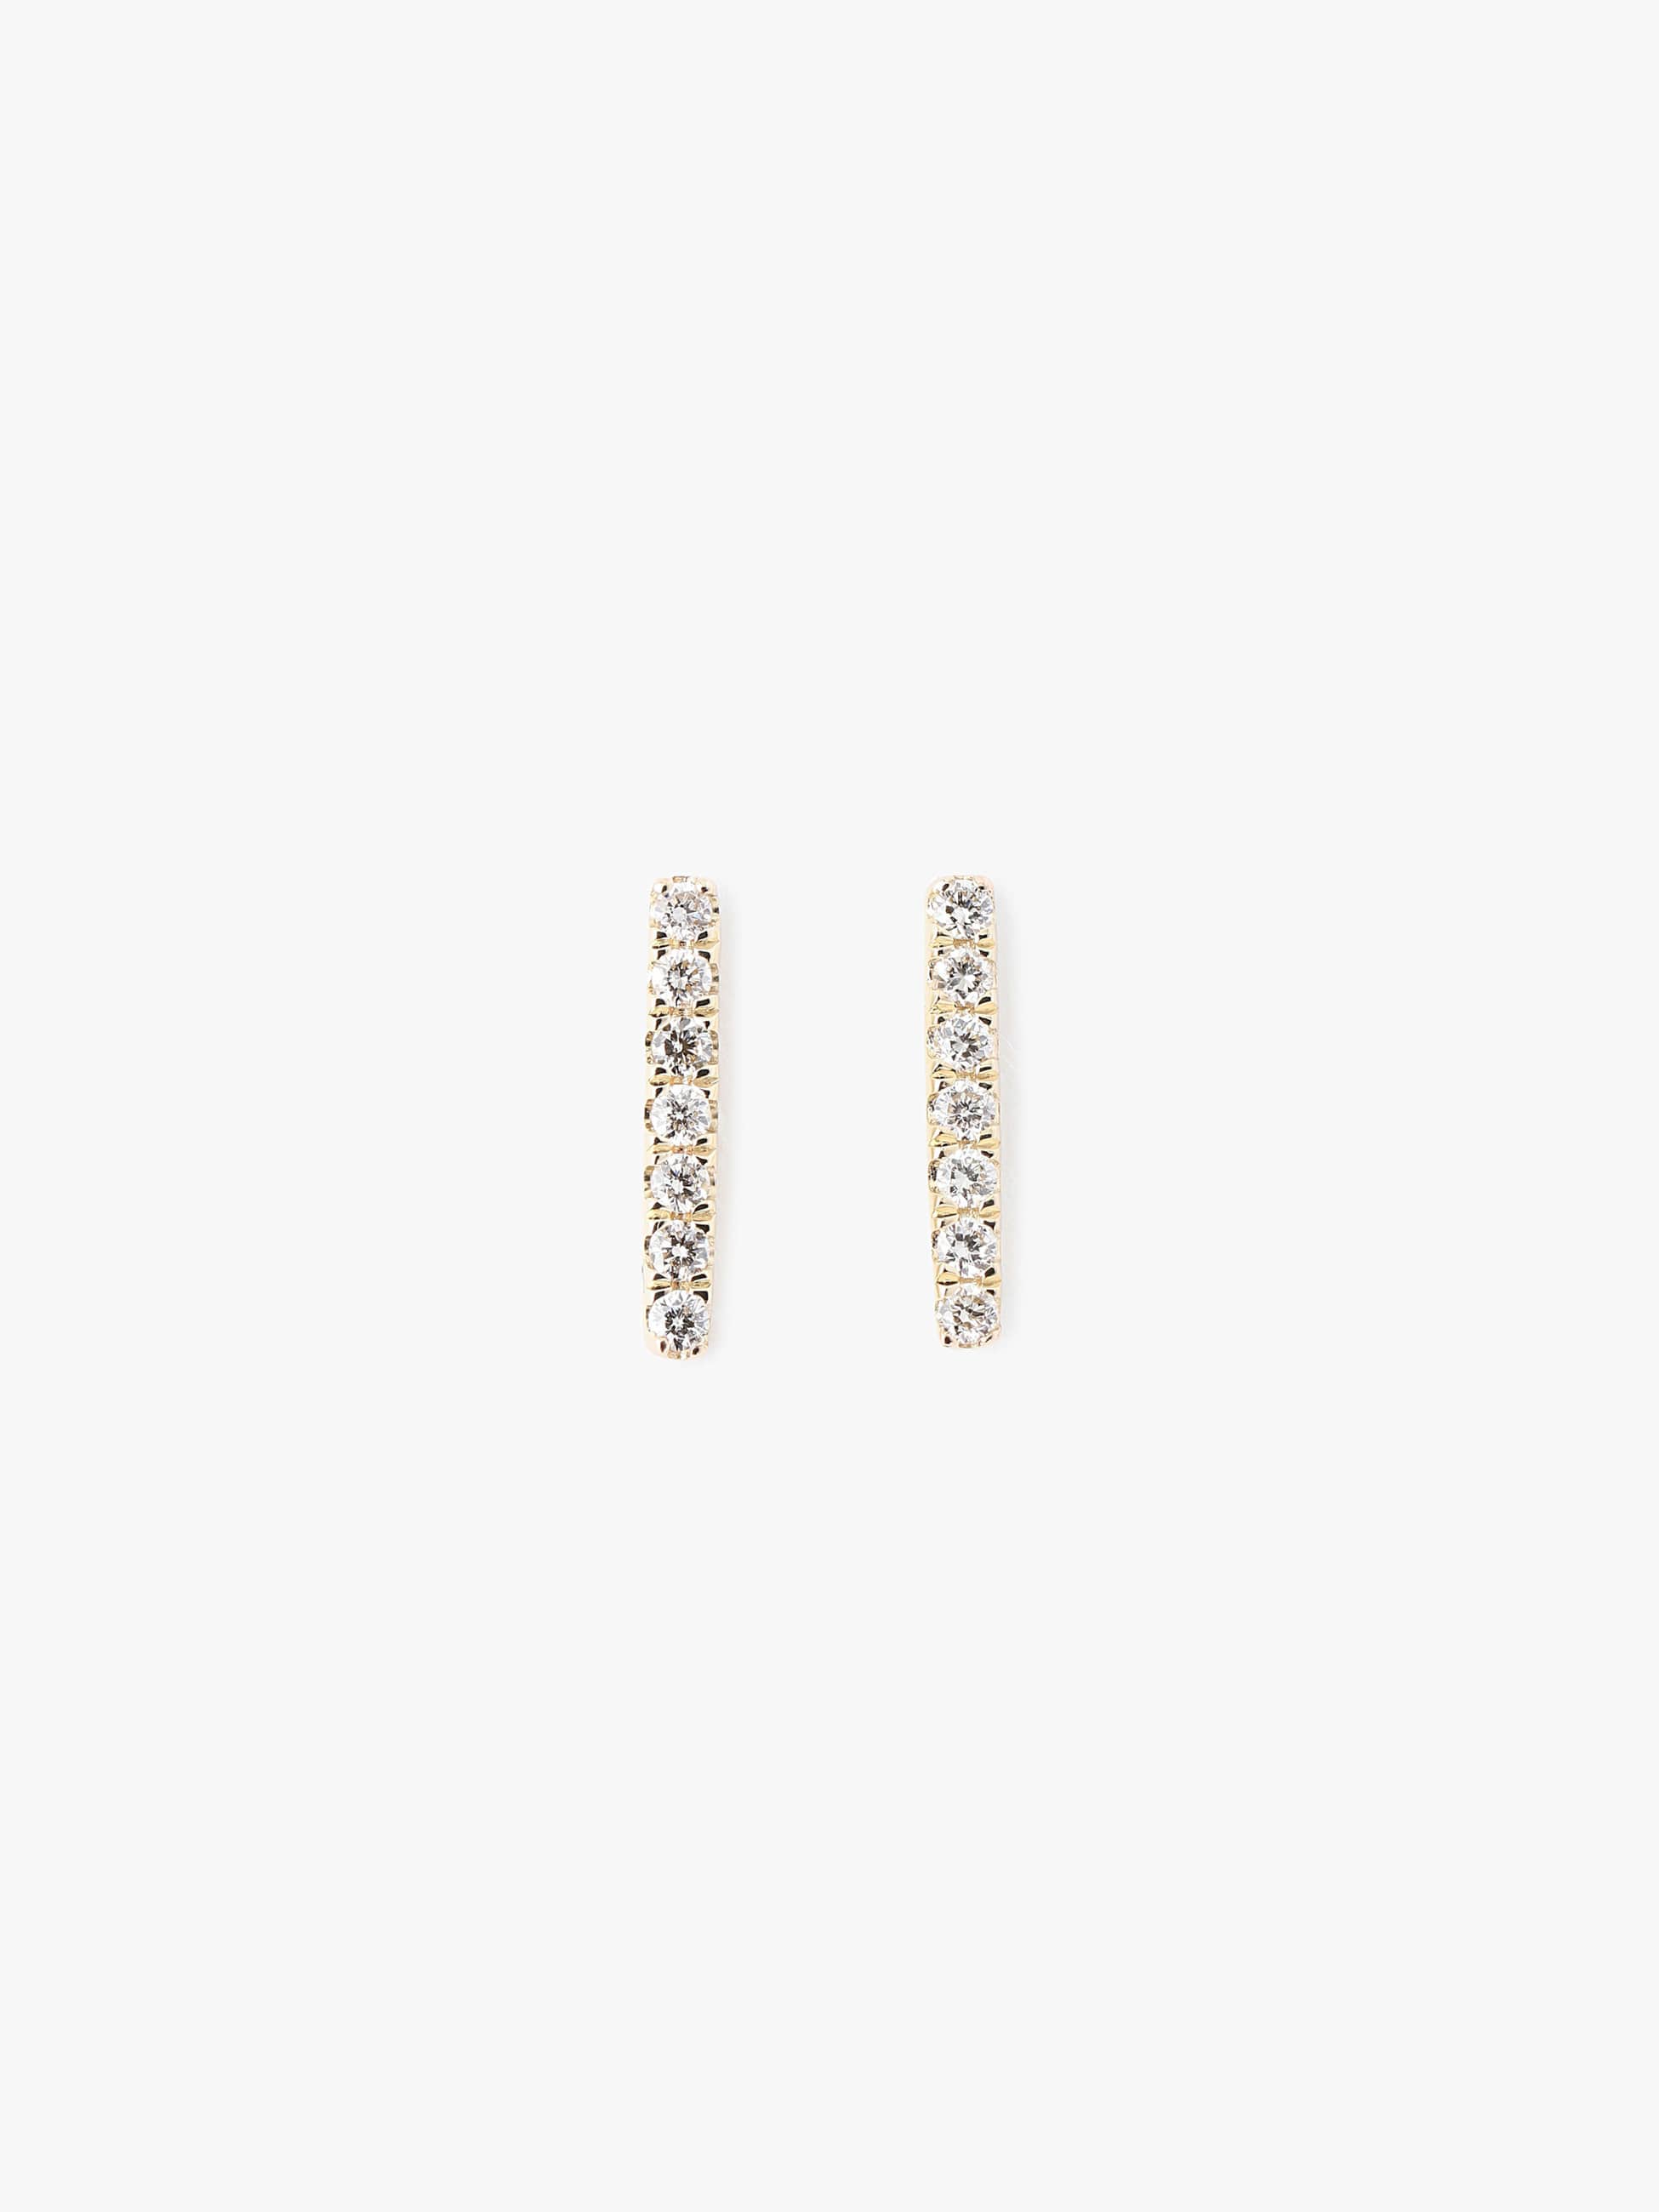 14kt Petite Bar Stud with White Diamond Pierced Earrings